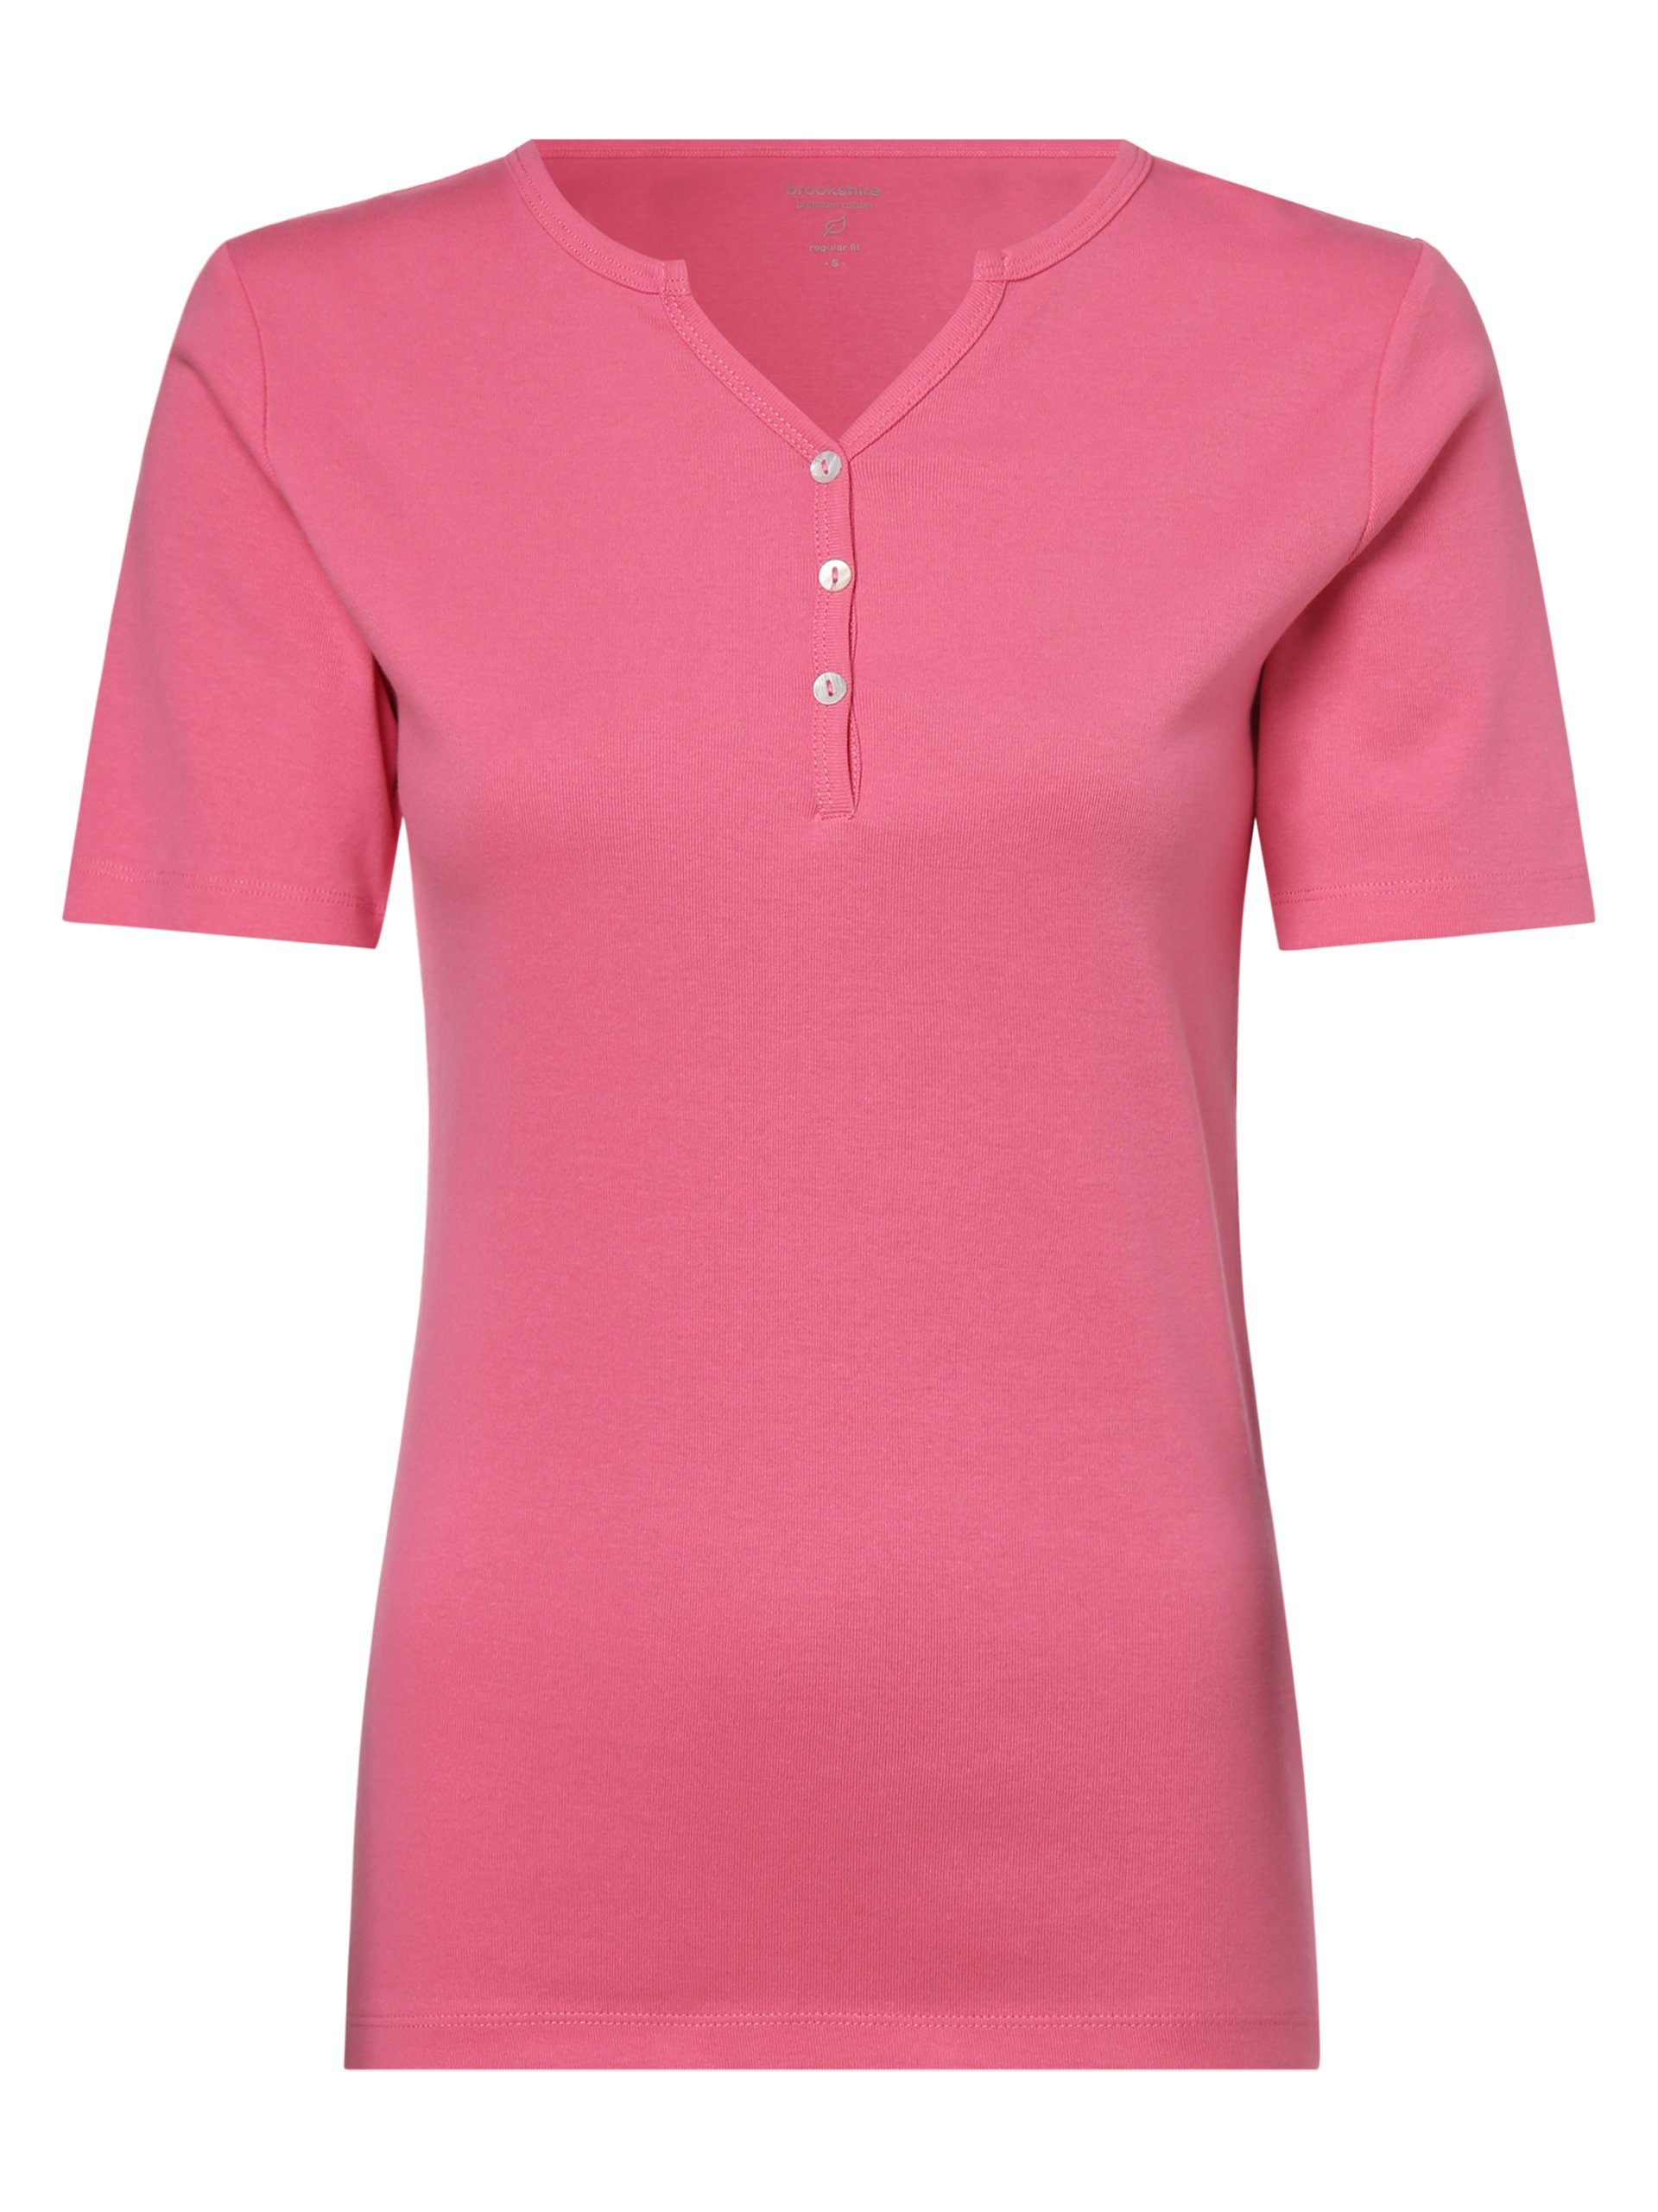 T-Shirt brookshire pink